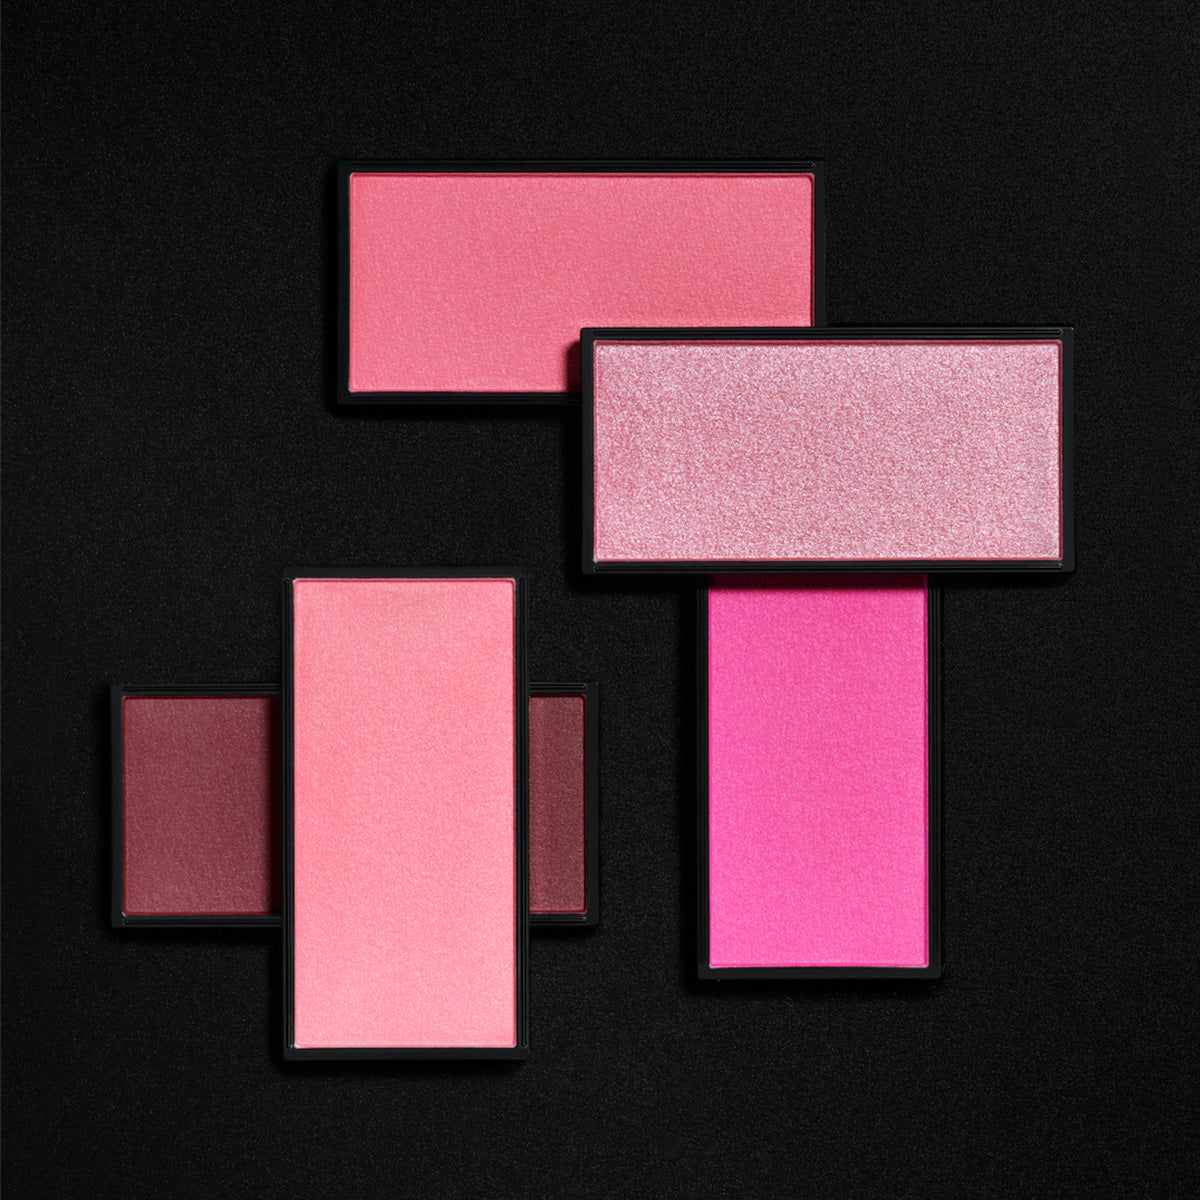 SE POMPONNER - BRIGHT PINK - matte finish powder blush in bright pink shade